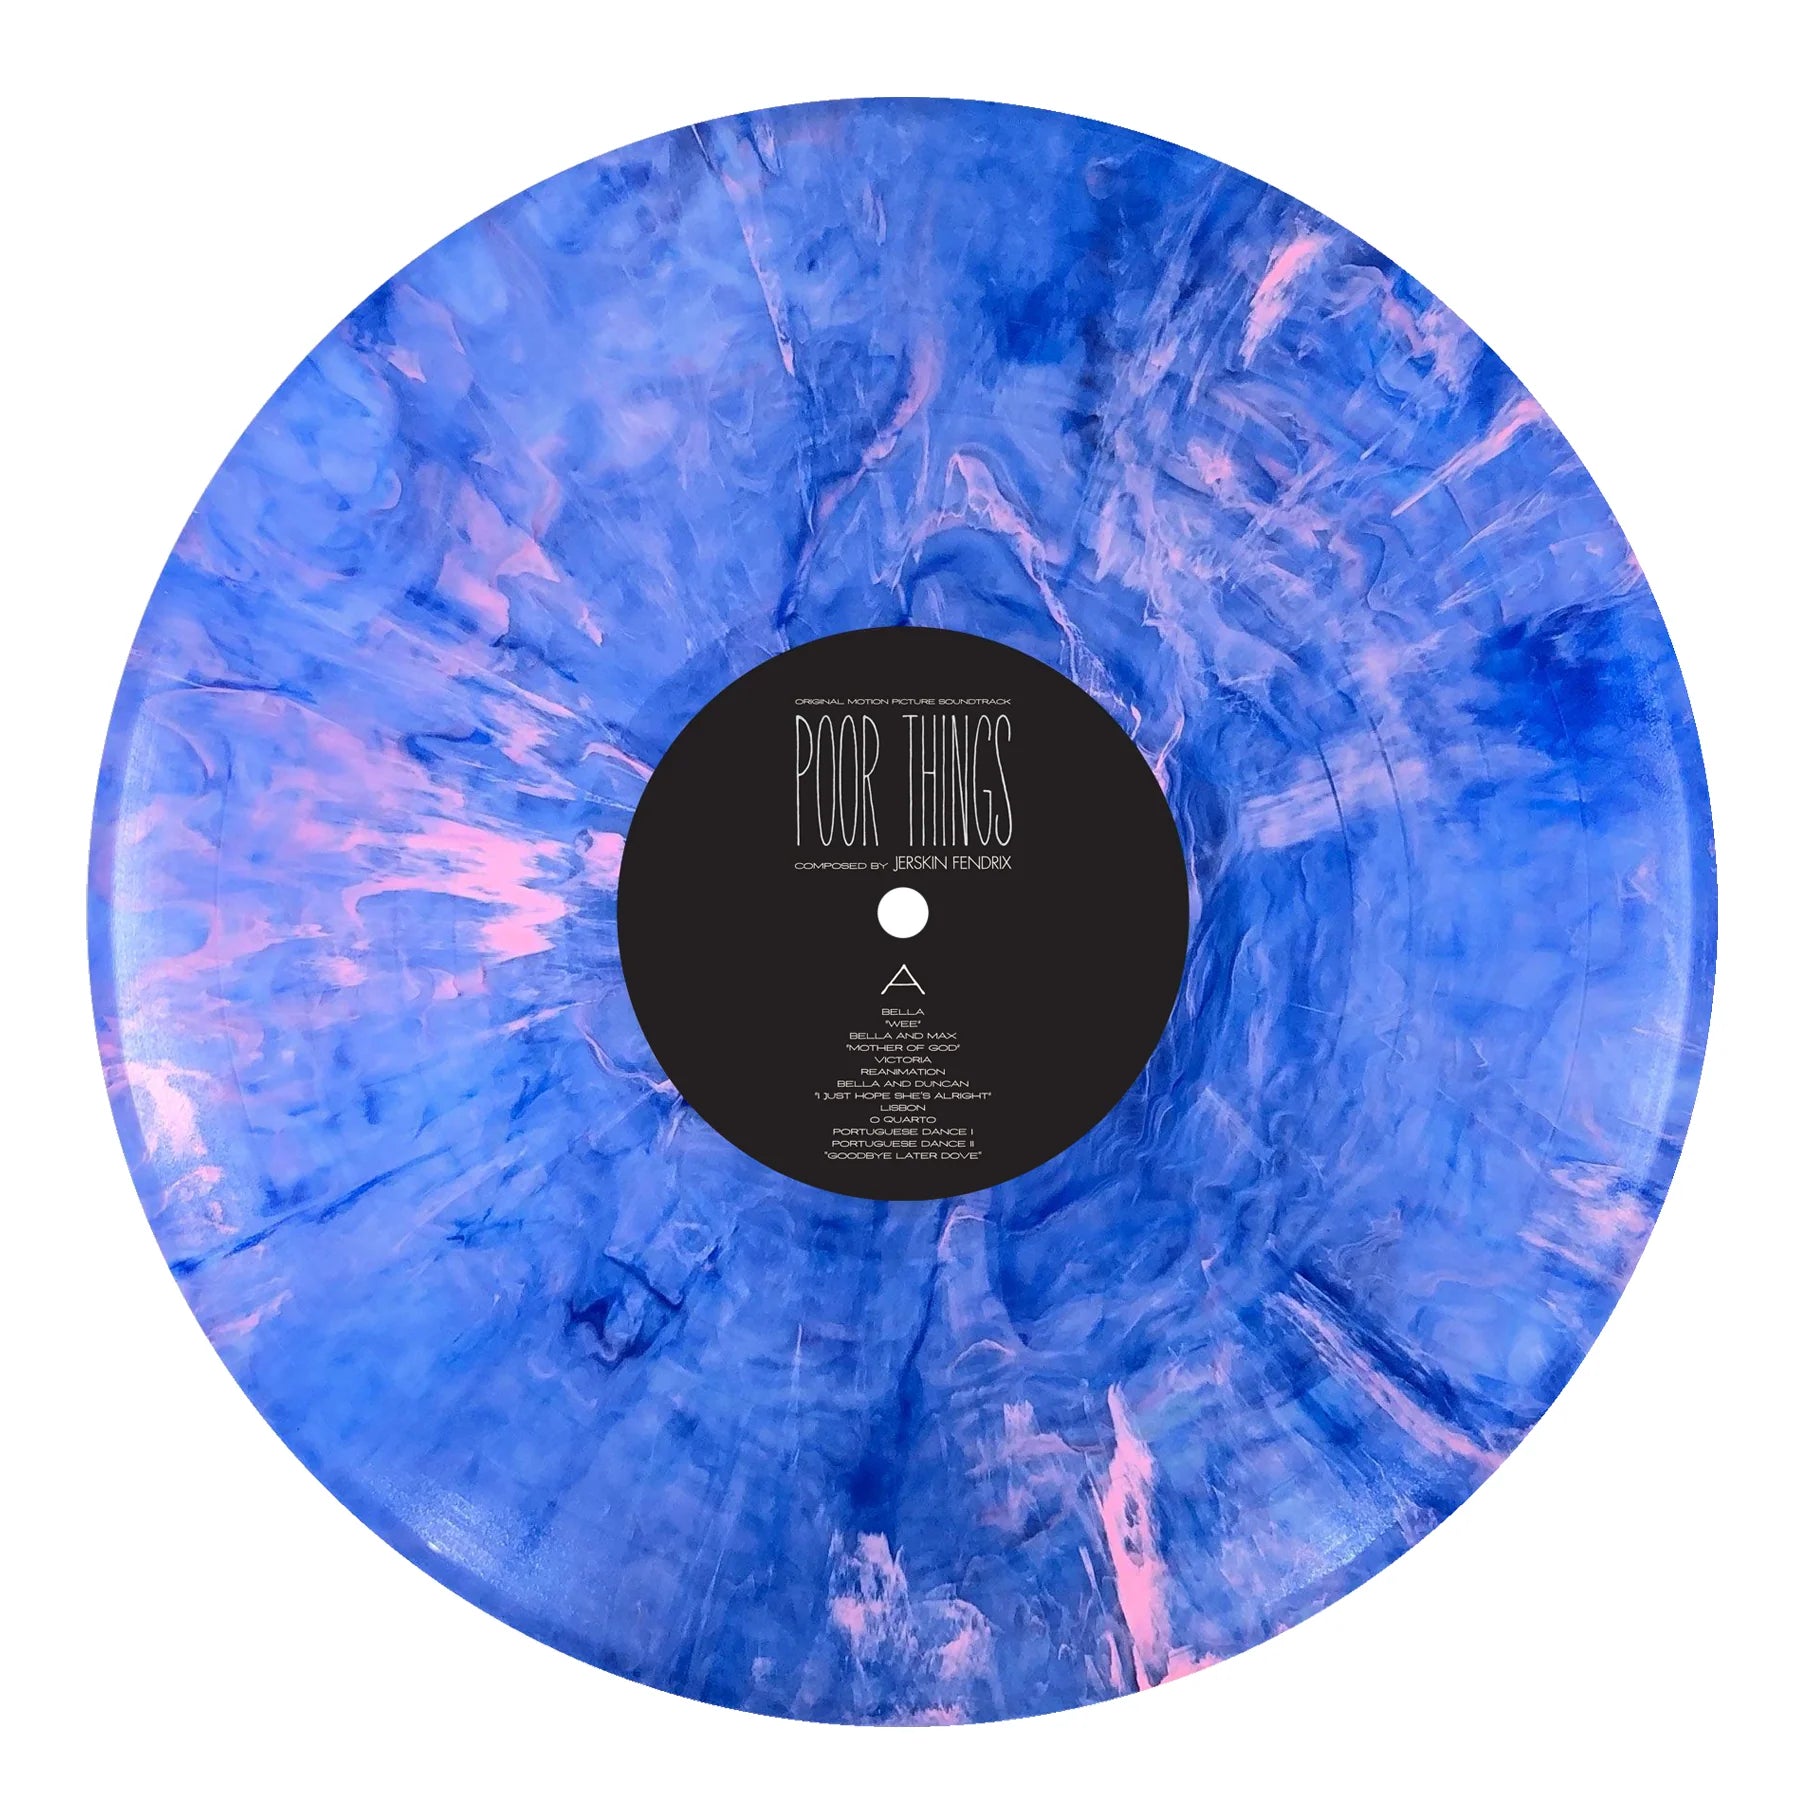 Poor Things (Original Soundtrack) (Blue and Pink Vinyl LP)